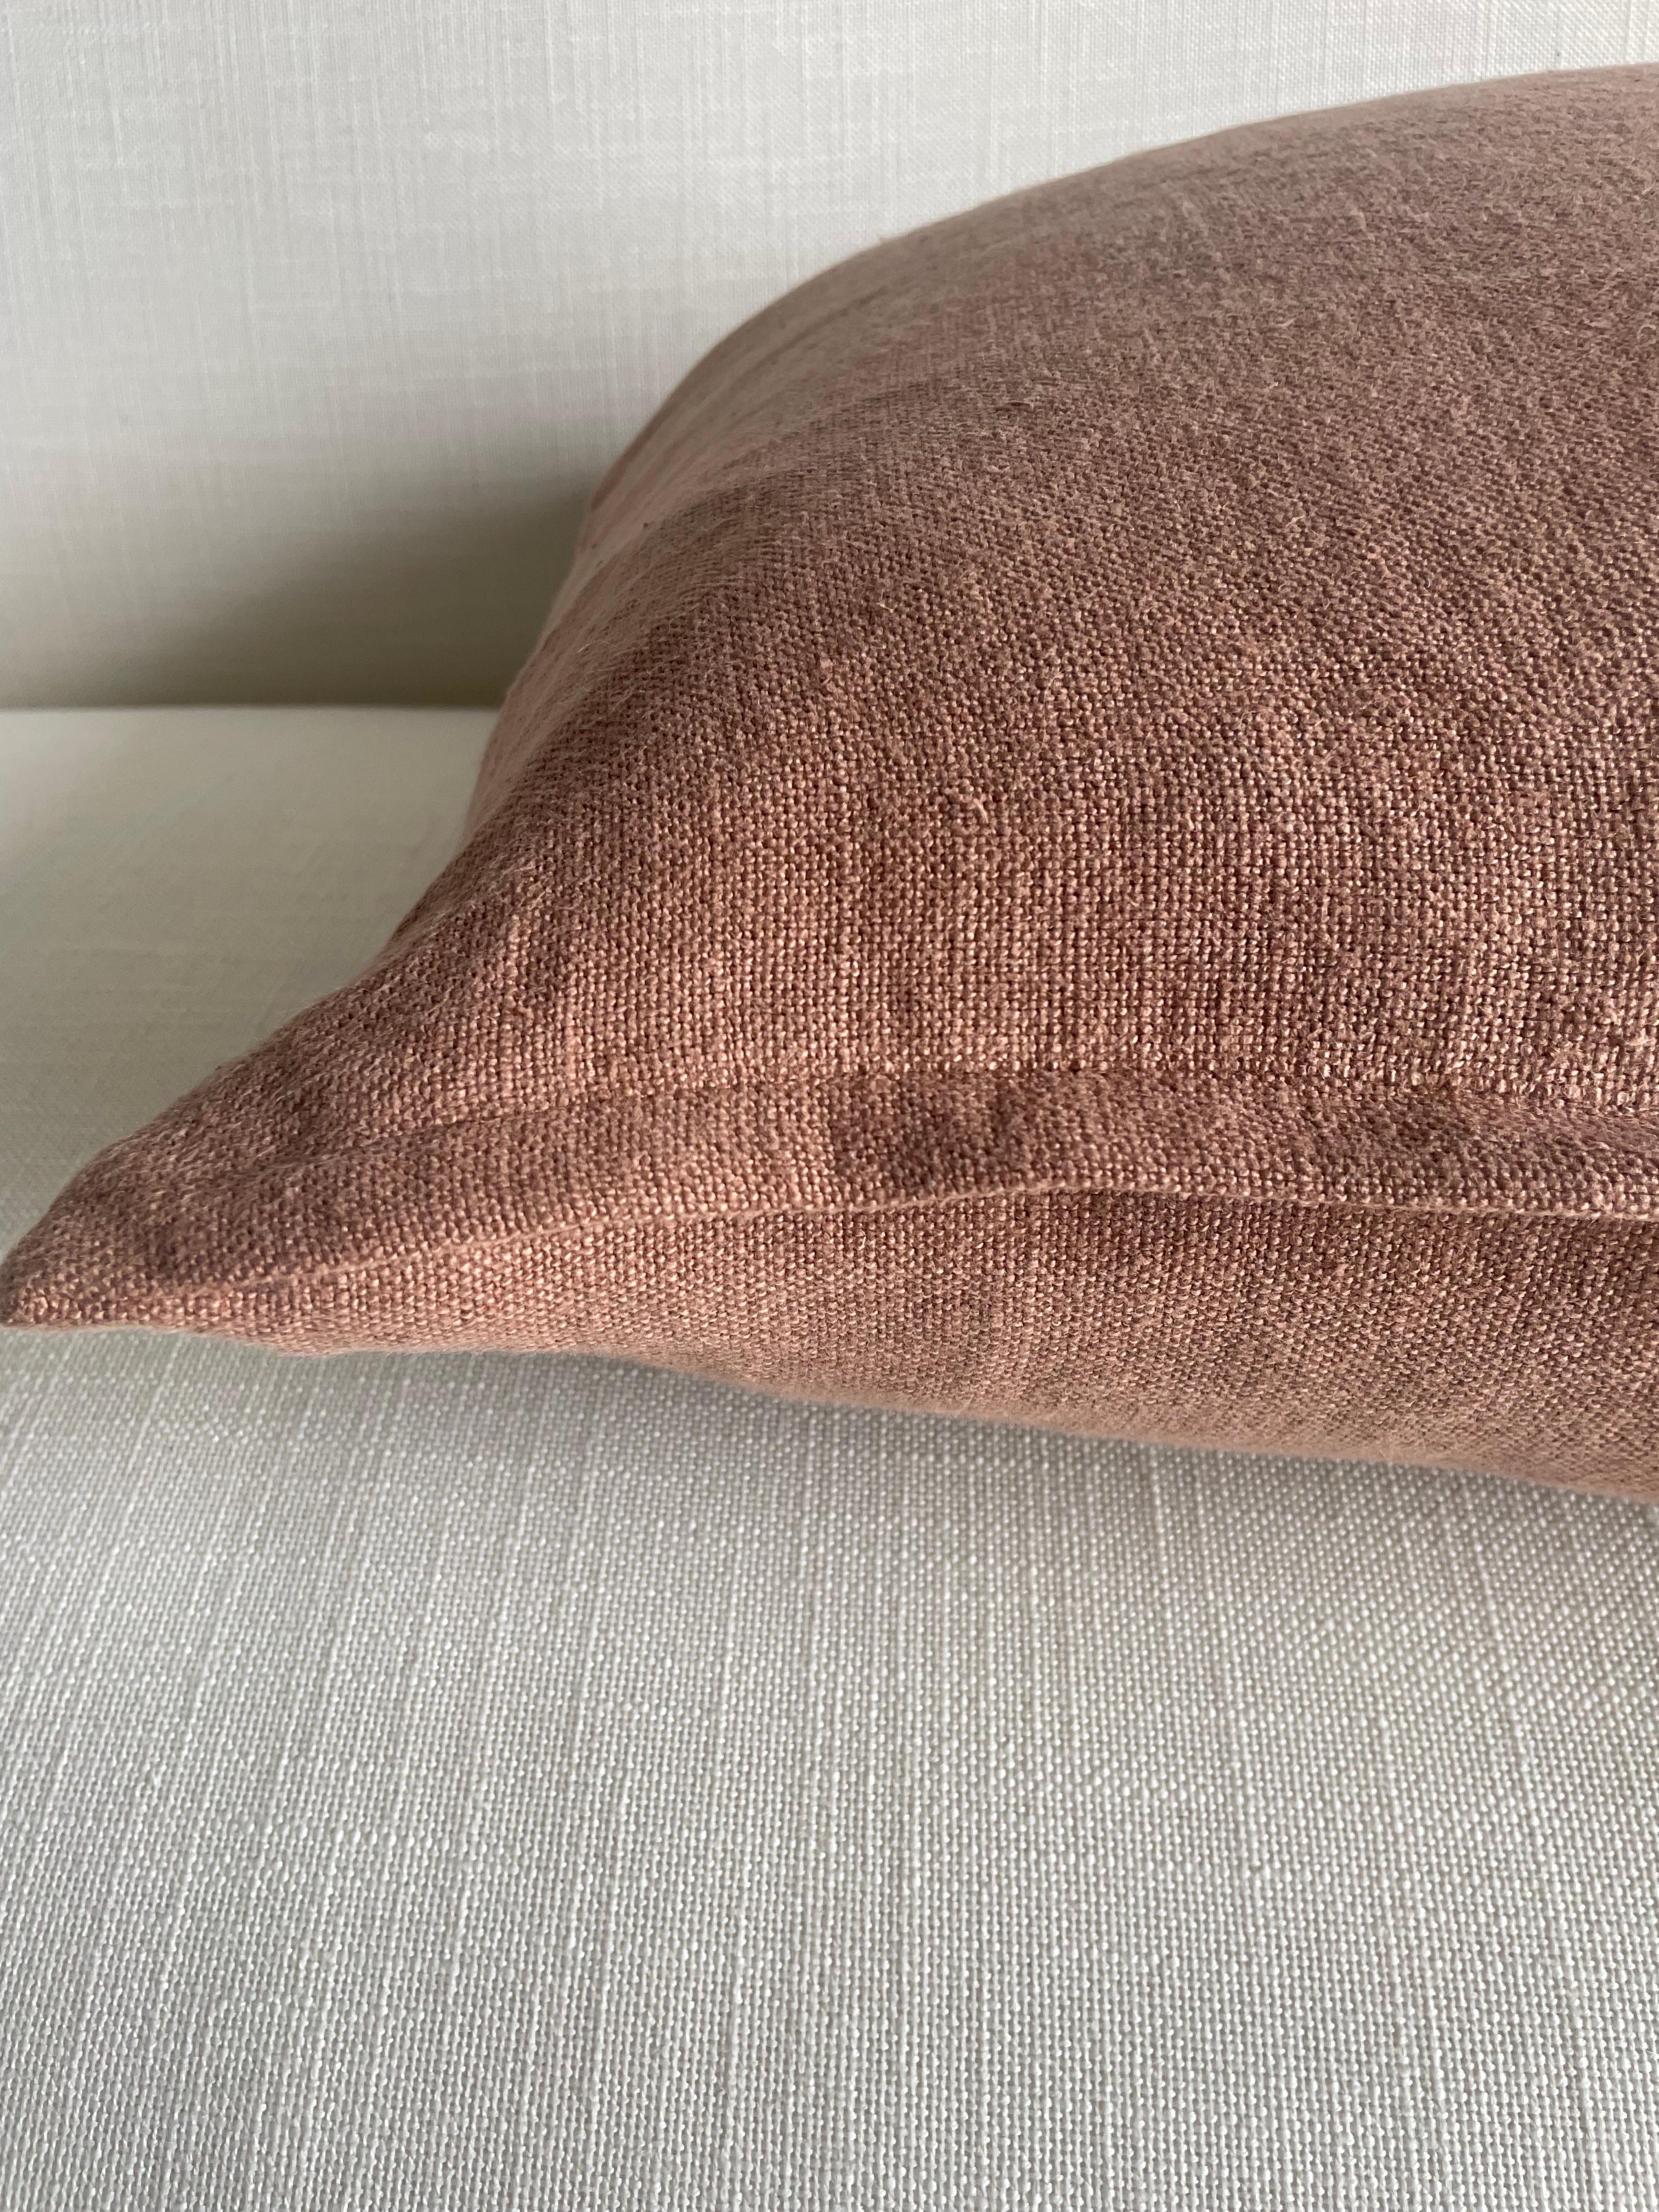 Belgian Linen Pillow Cover in Cinnamon In New Condition For Sale In Brea, CA